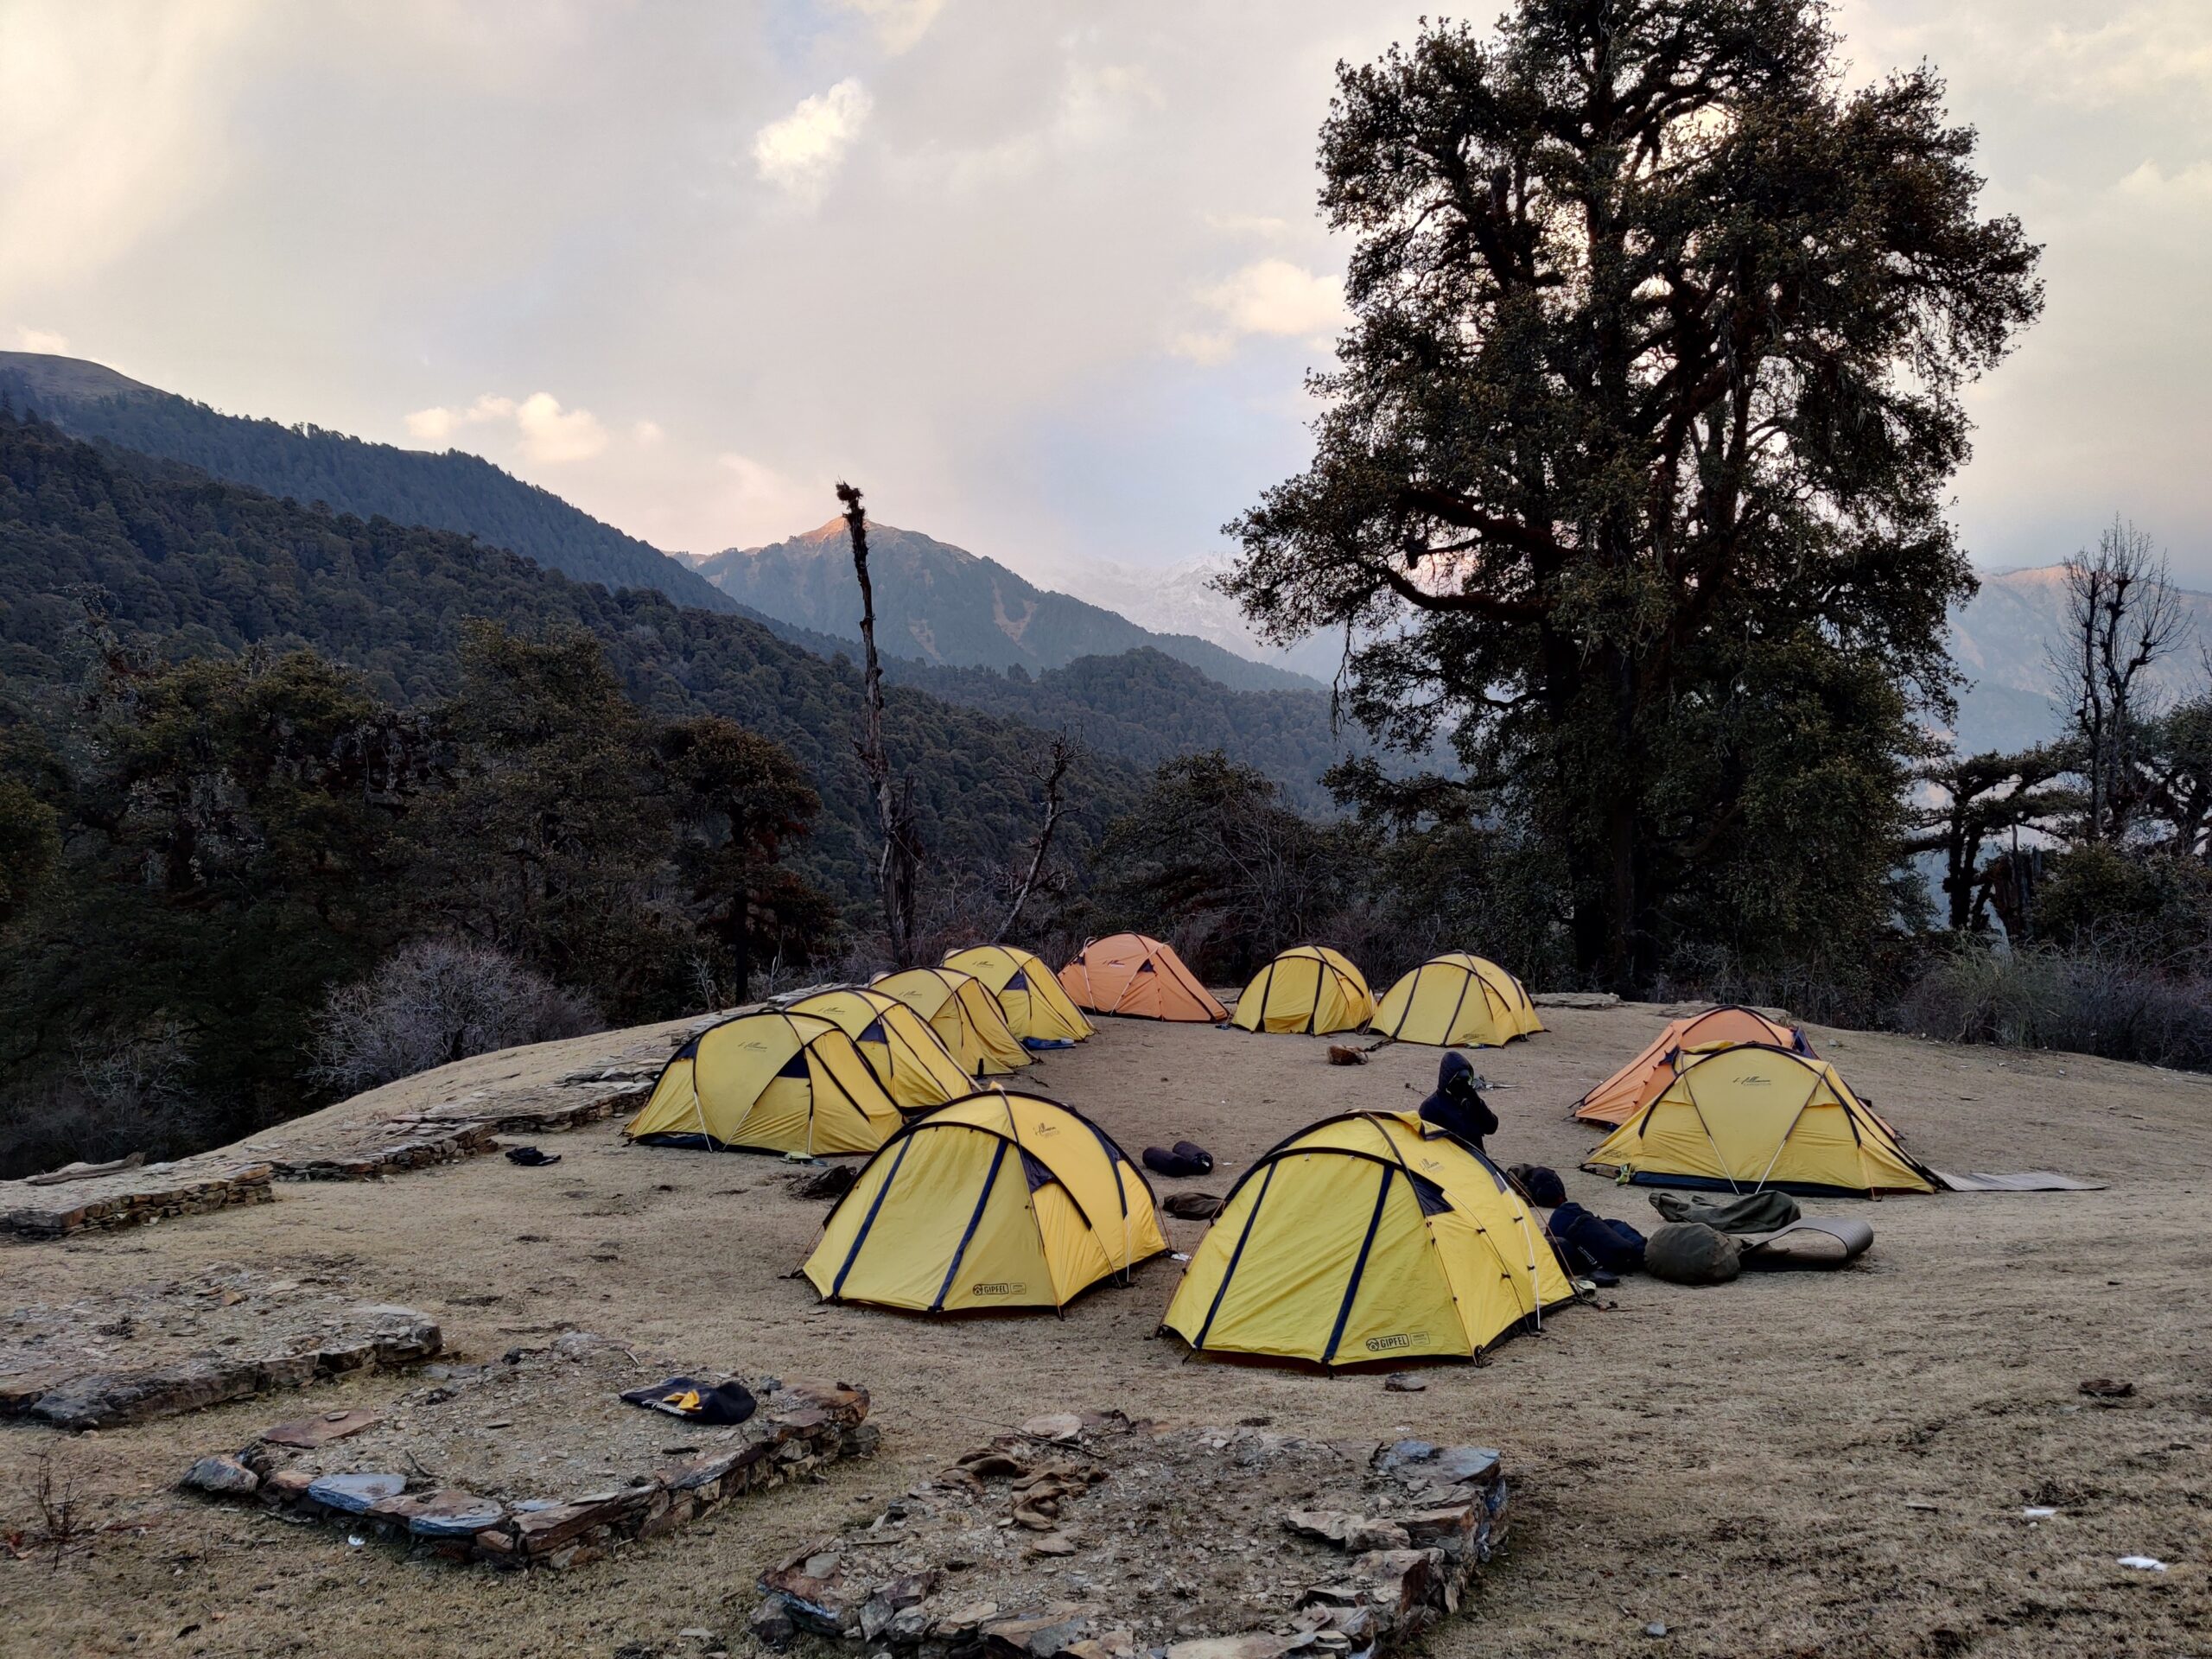 Gui campsite tent setup and view